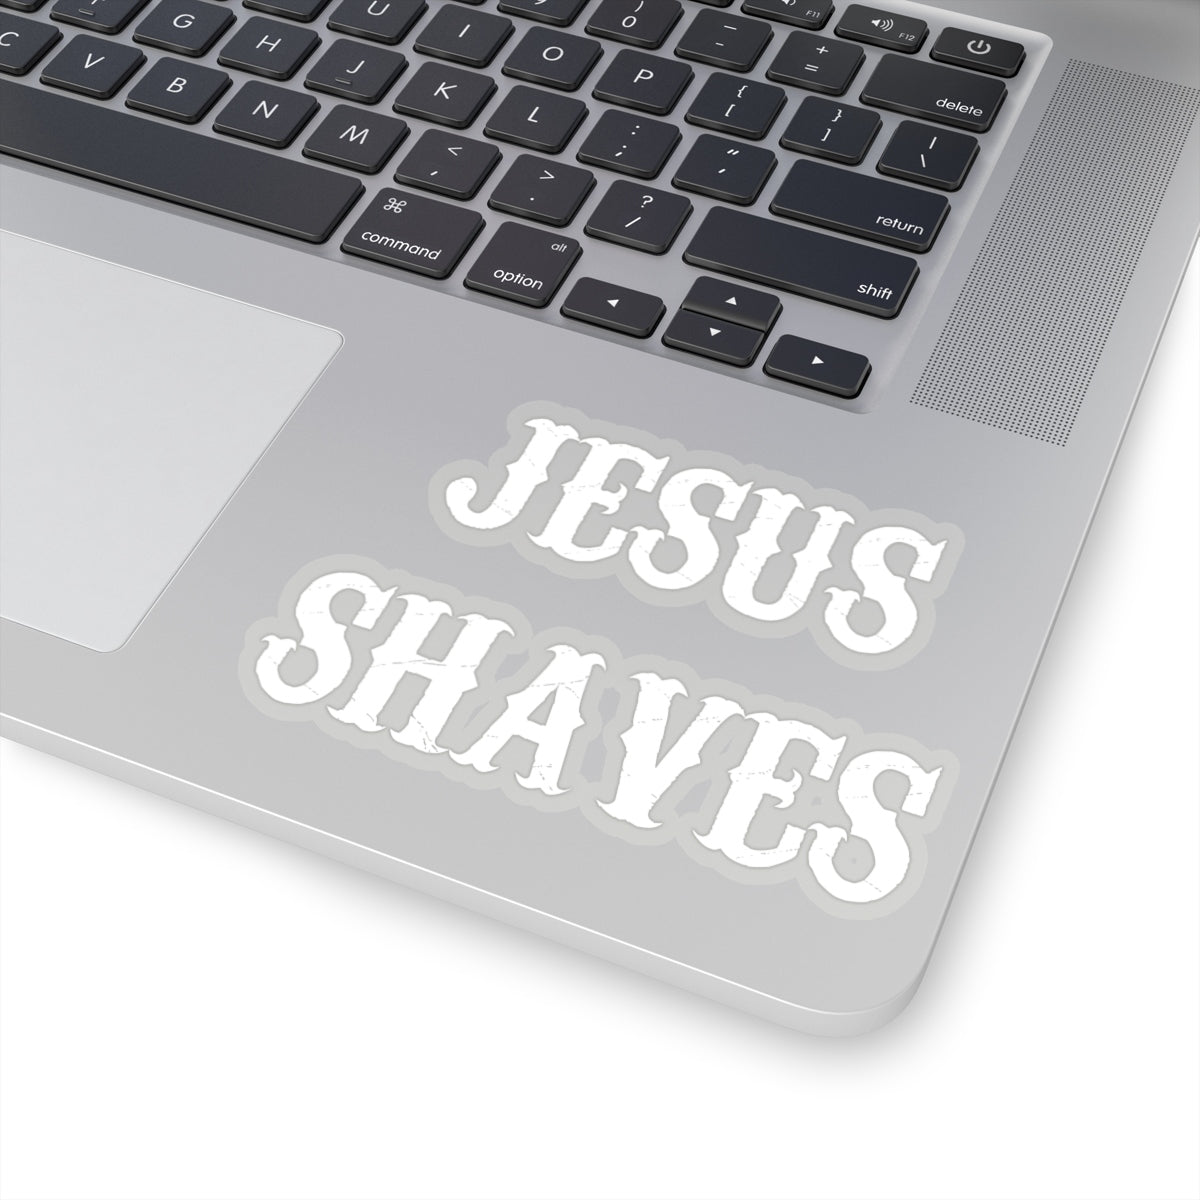 Jesus Shaves Transparent Sticker